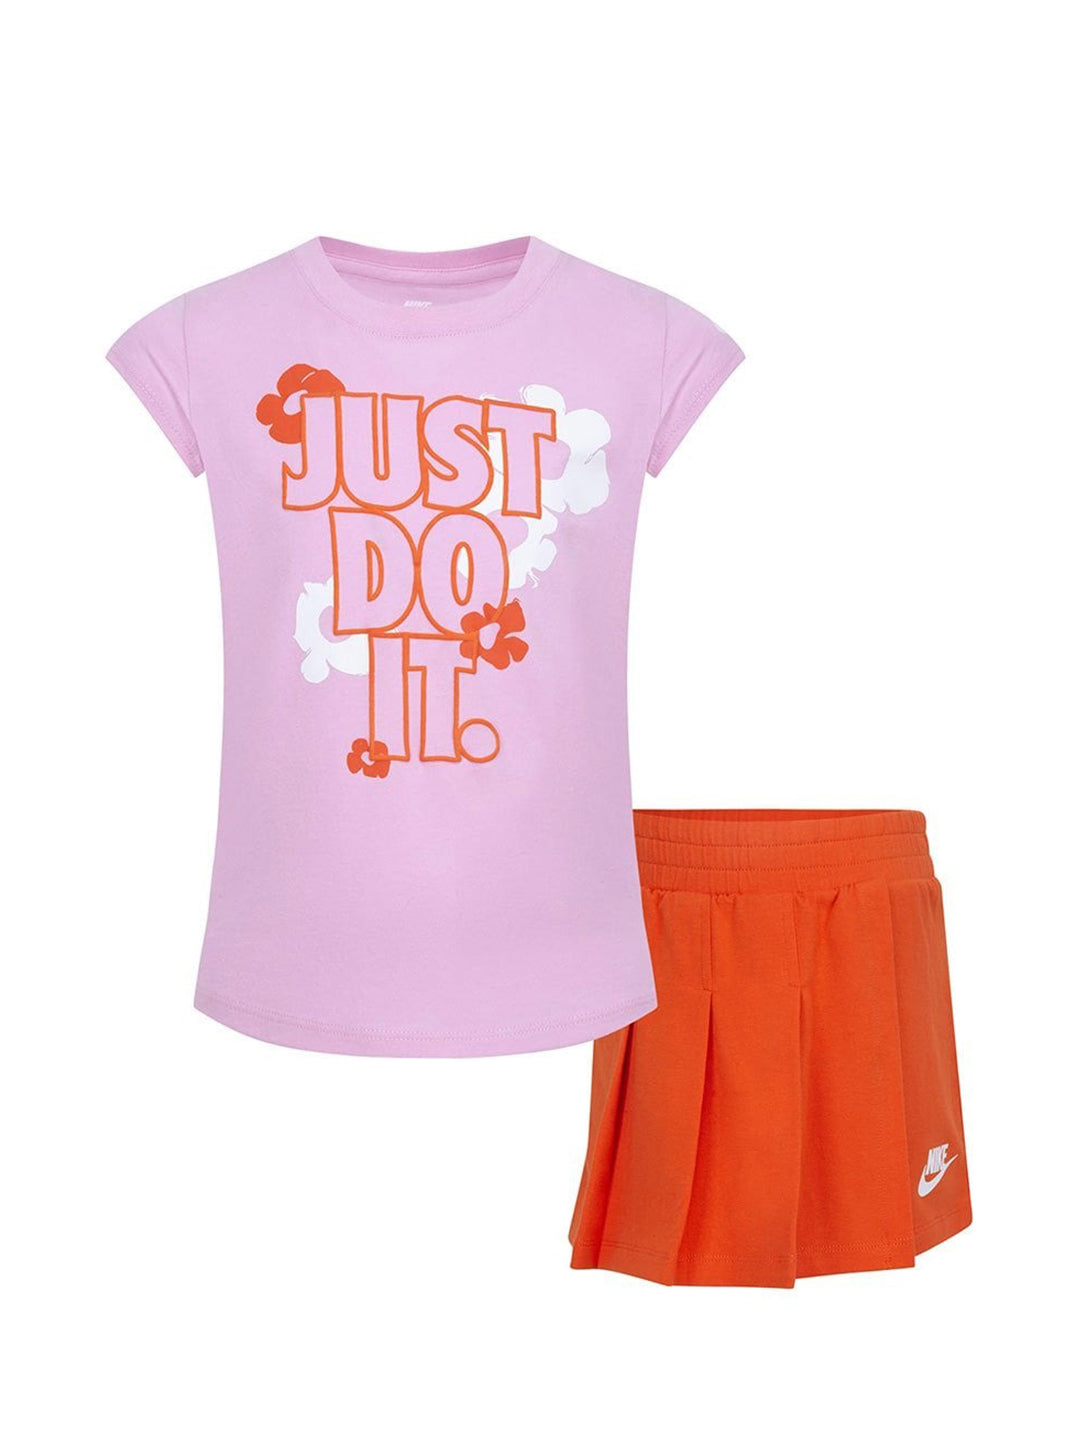 Nike coordinato kids rosa t-shirt e pantagonna